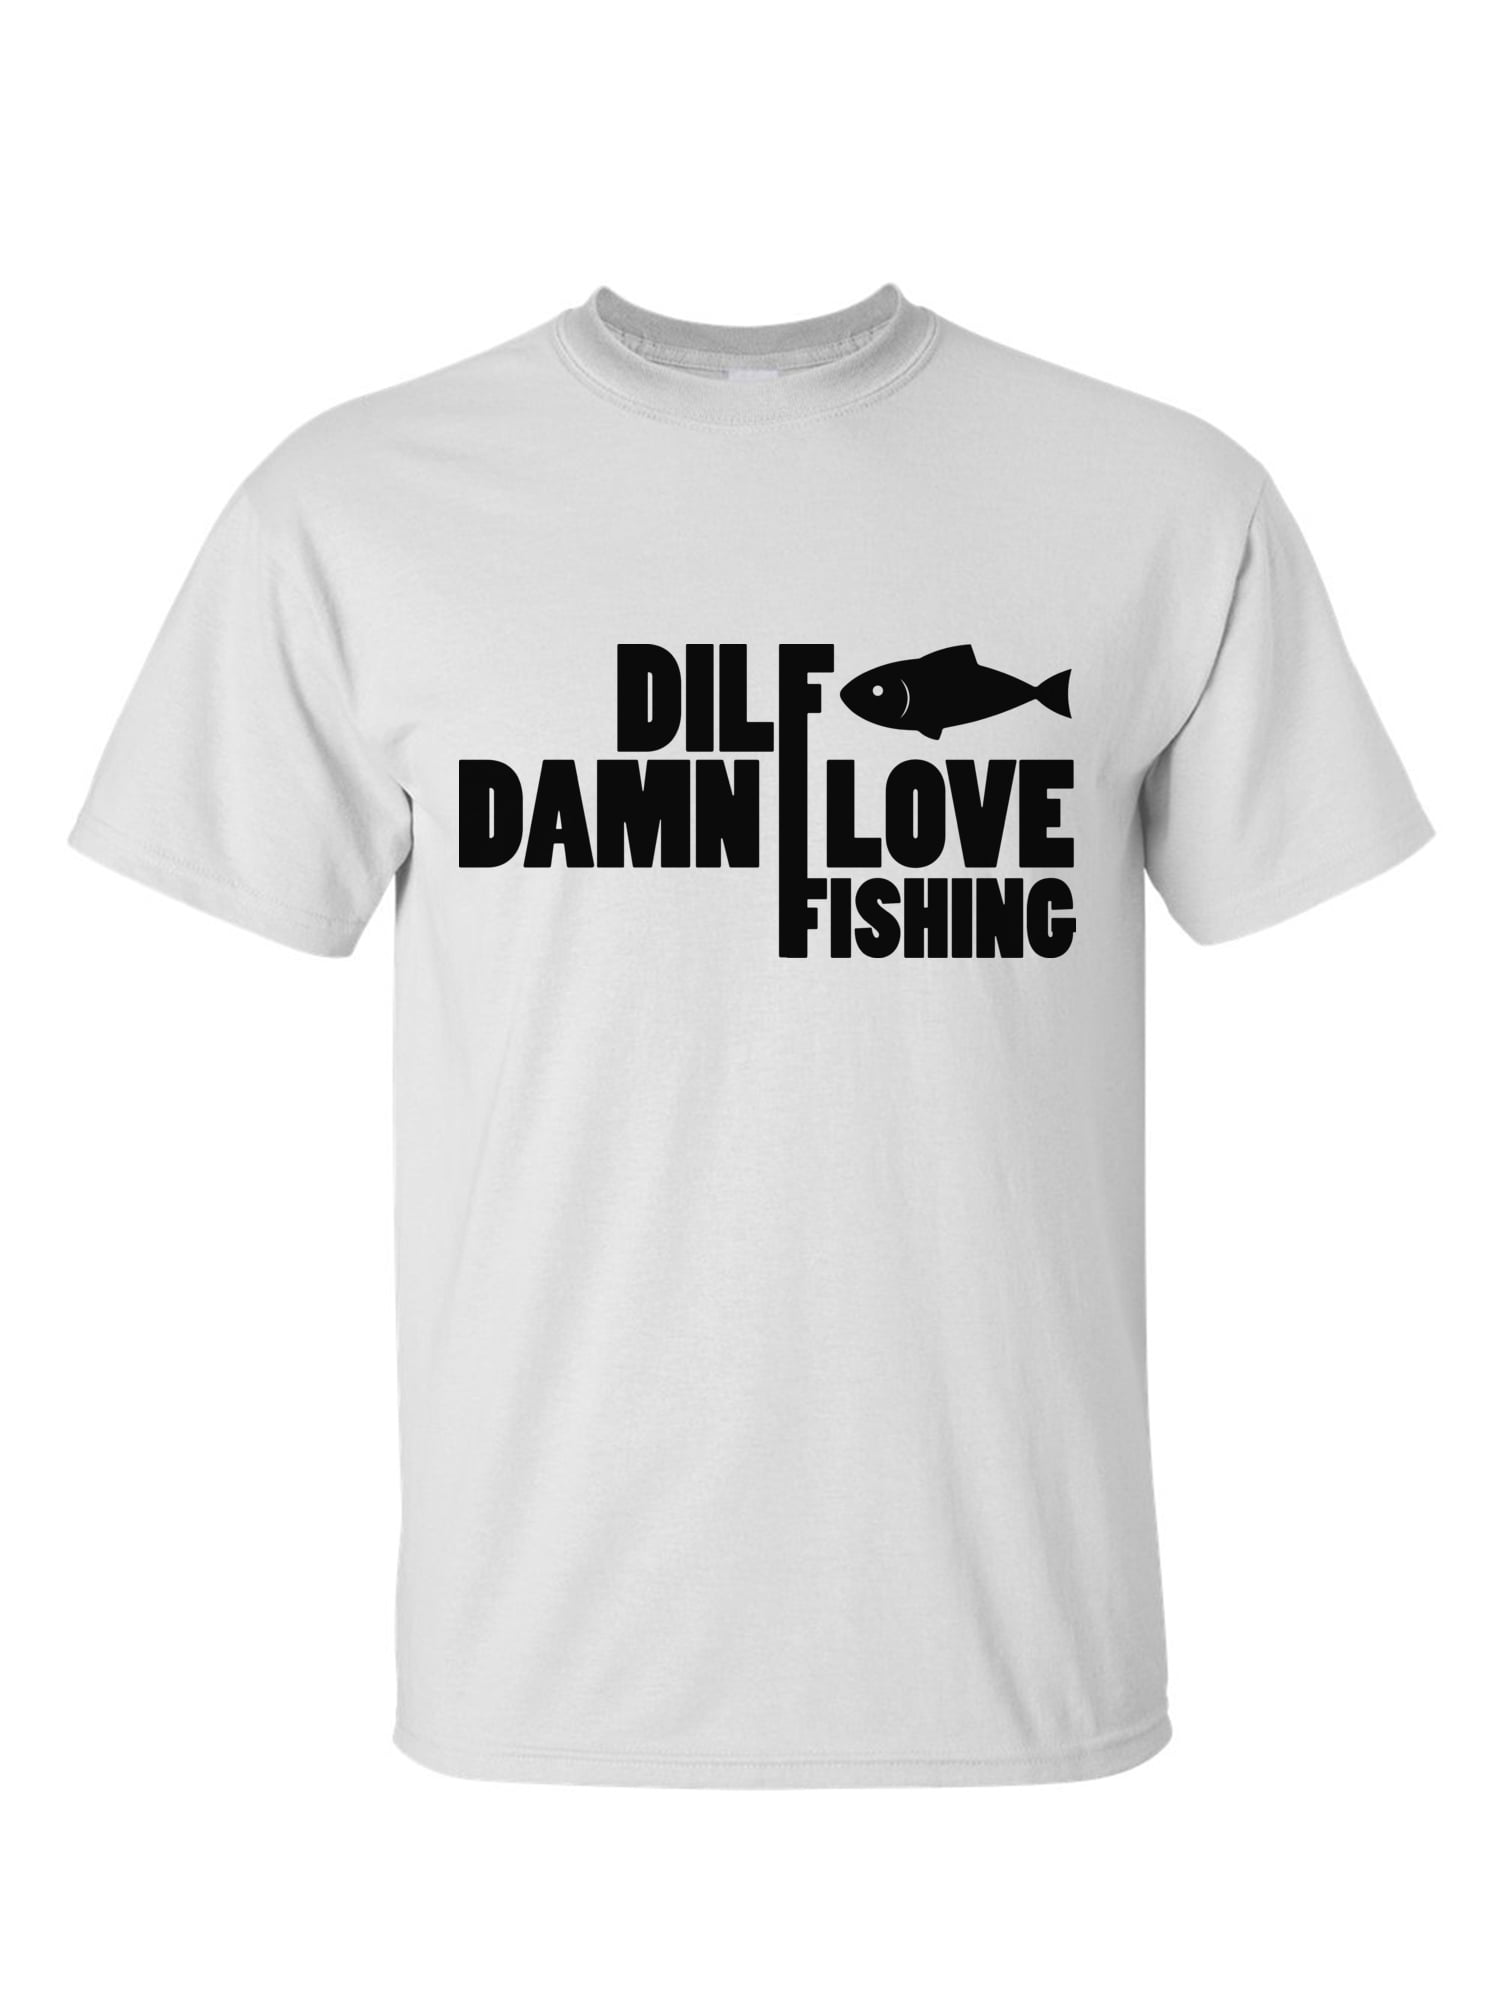 Big and Tall T shirts- Damn I Love Fishing Camping Shirts For Men